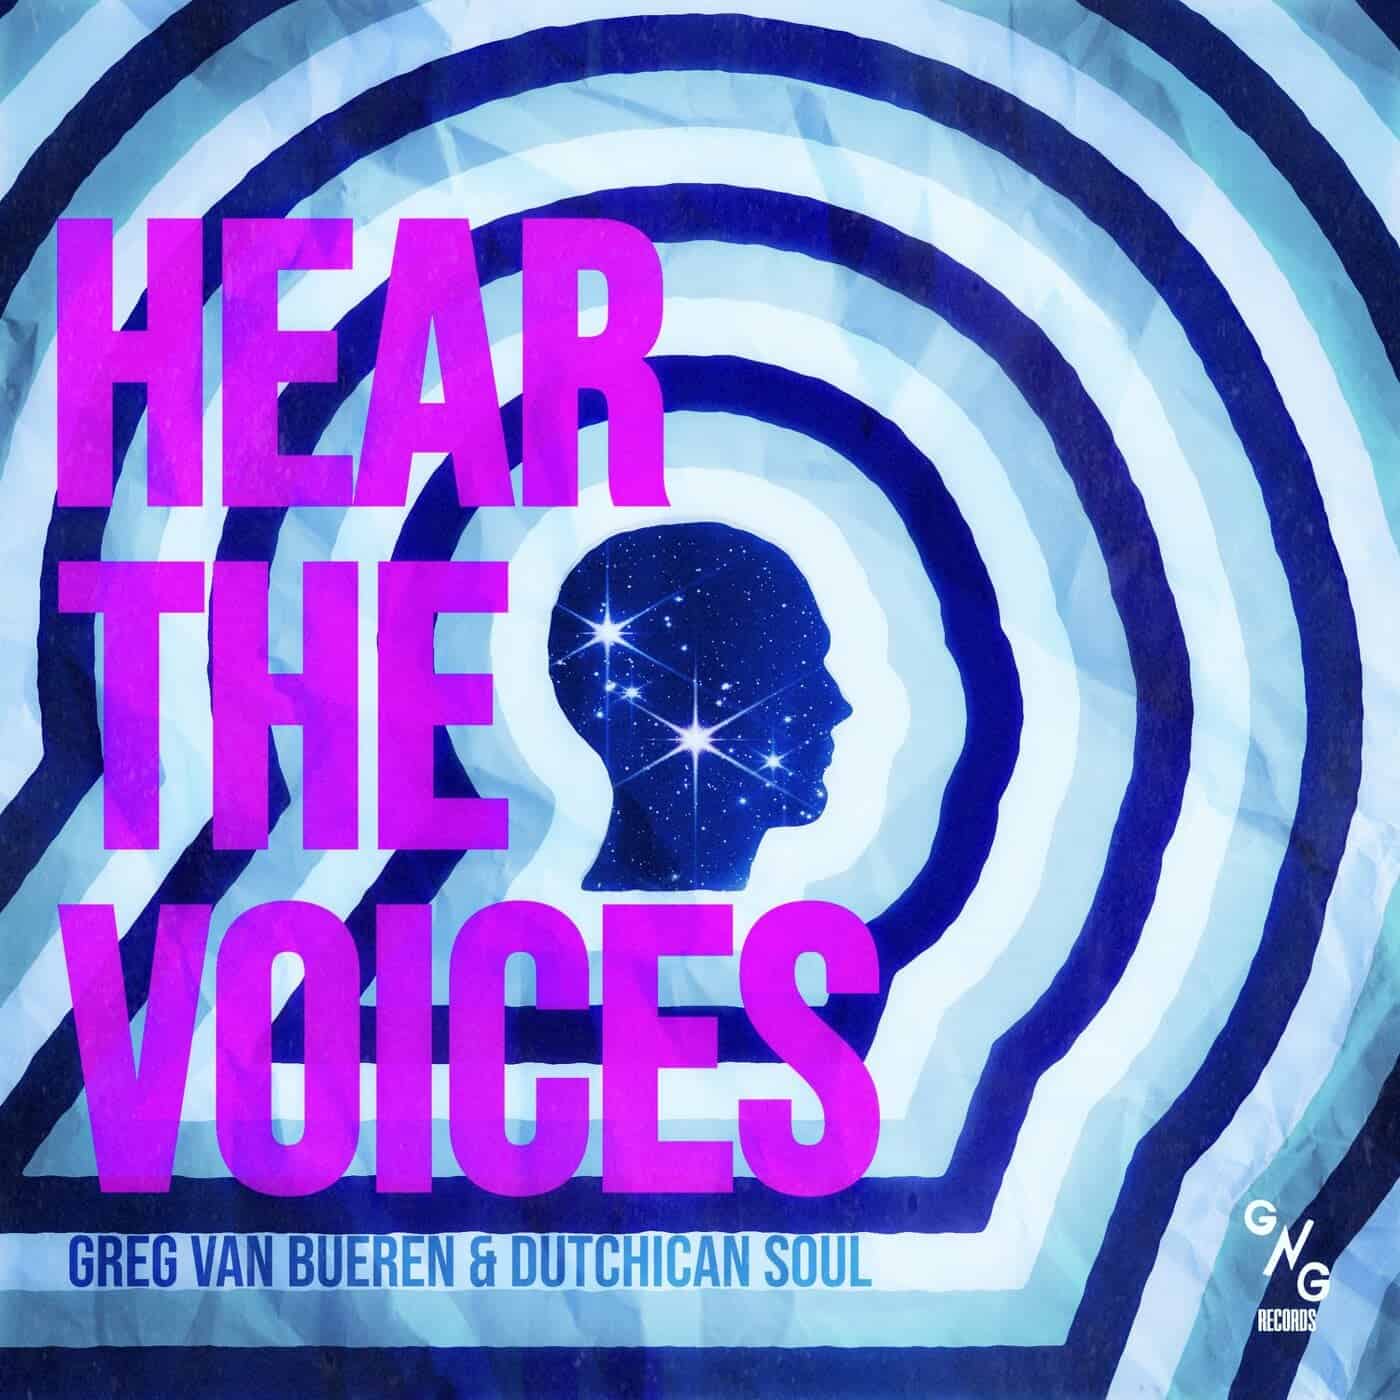 Download Dutchican Soul, Greg Van Bueren - Hear The Voices on Electrobuzz